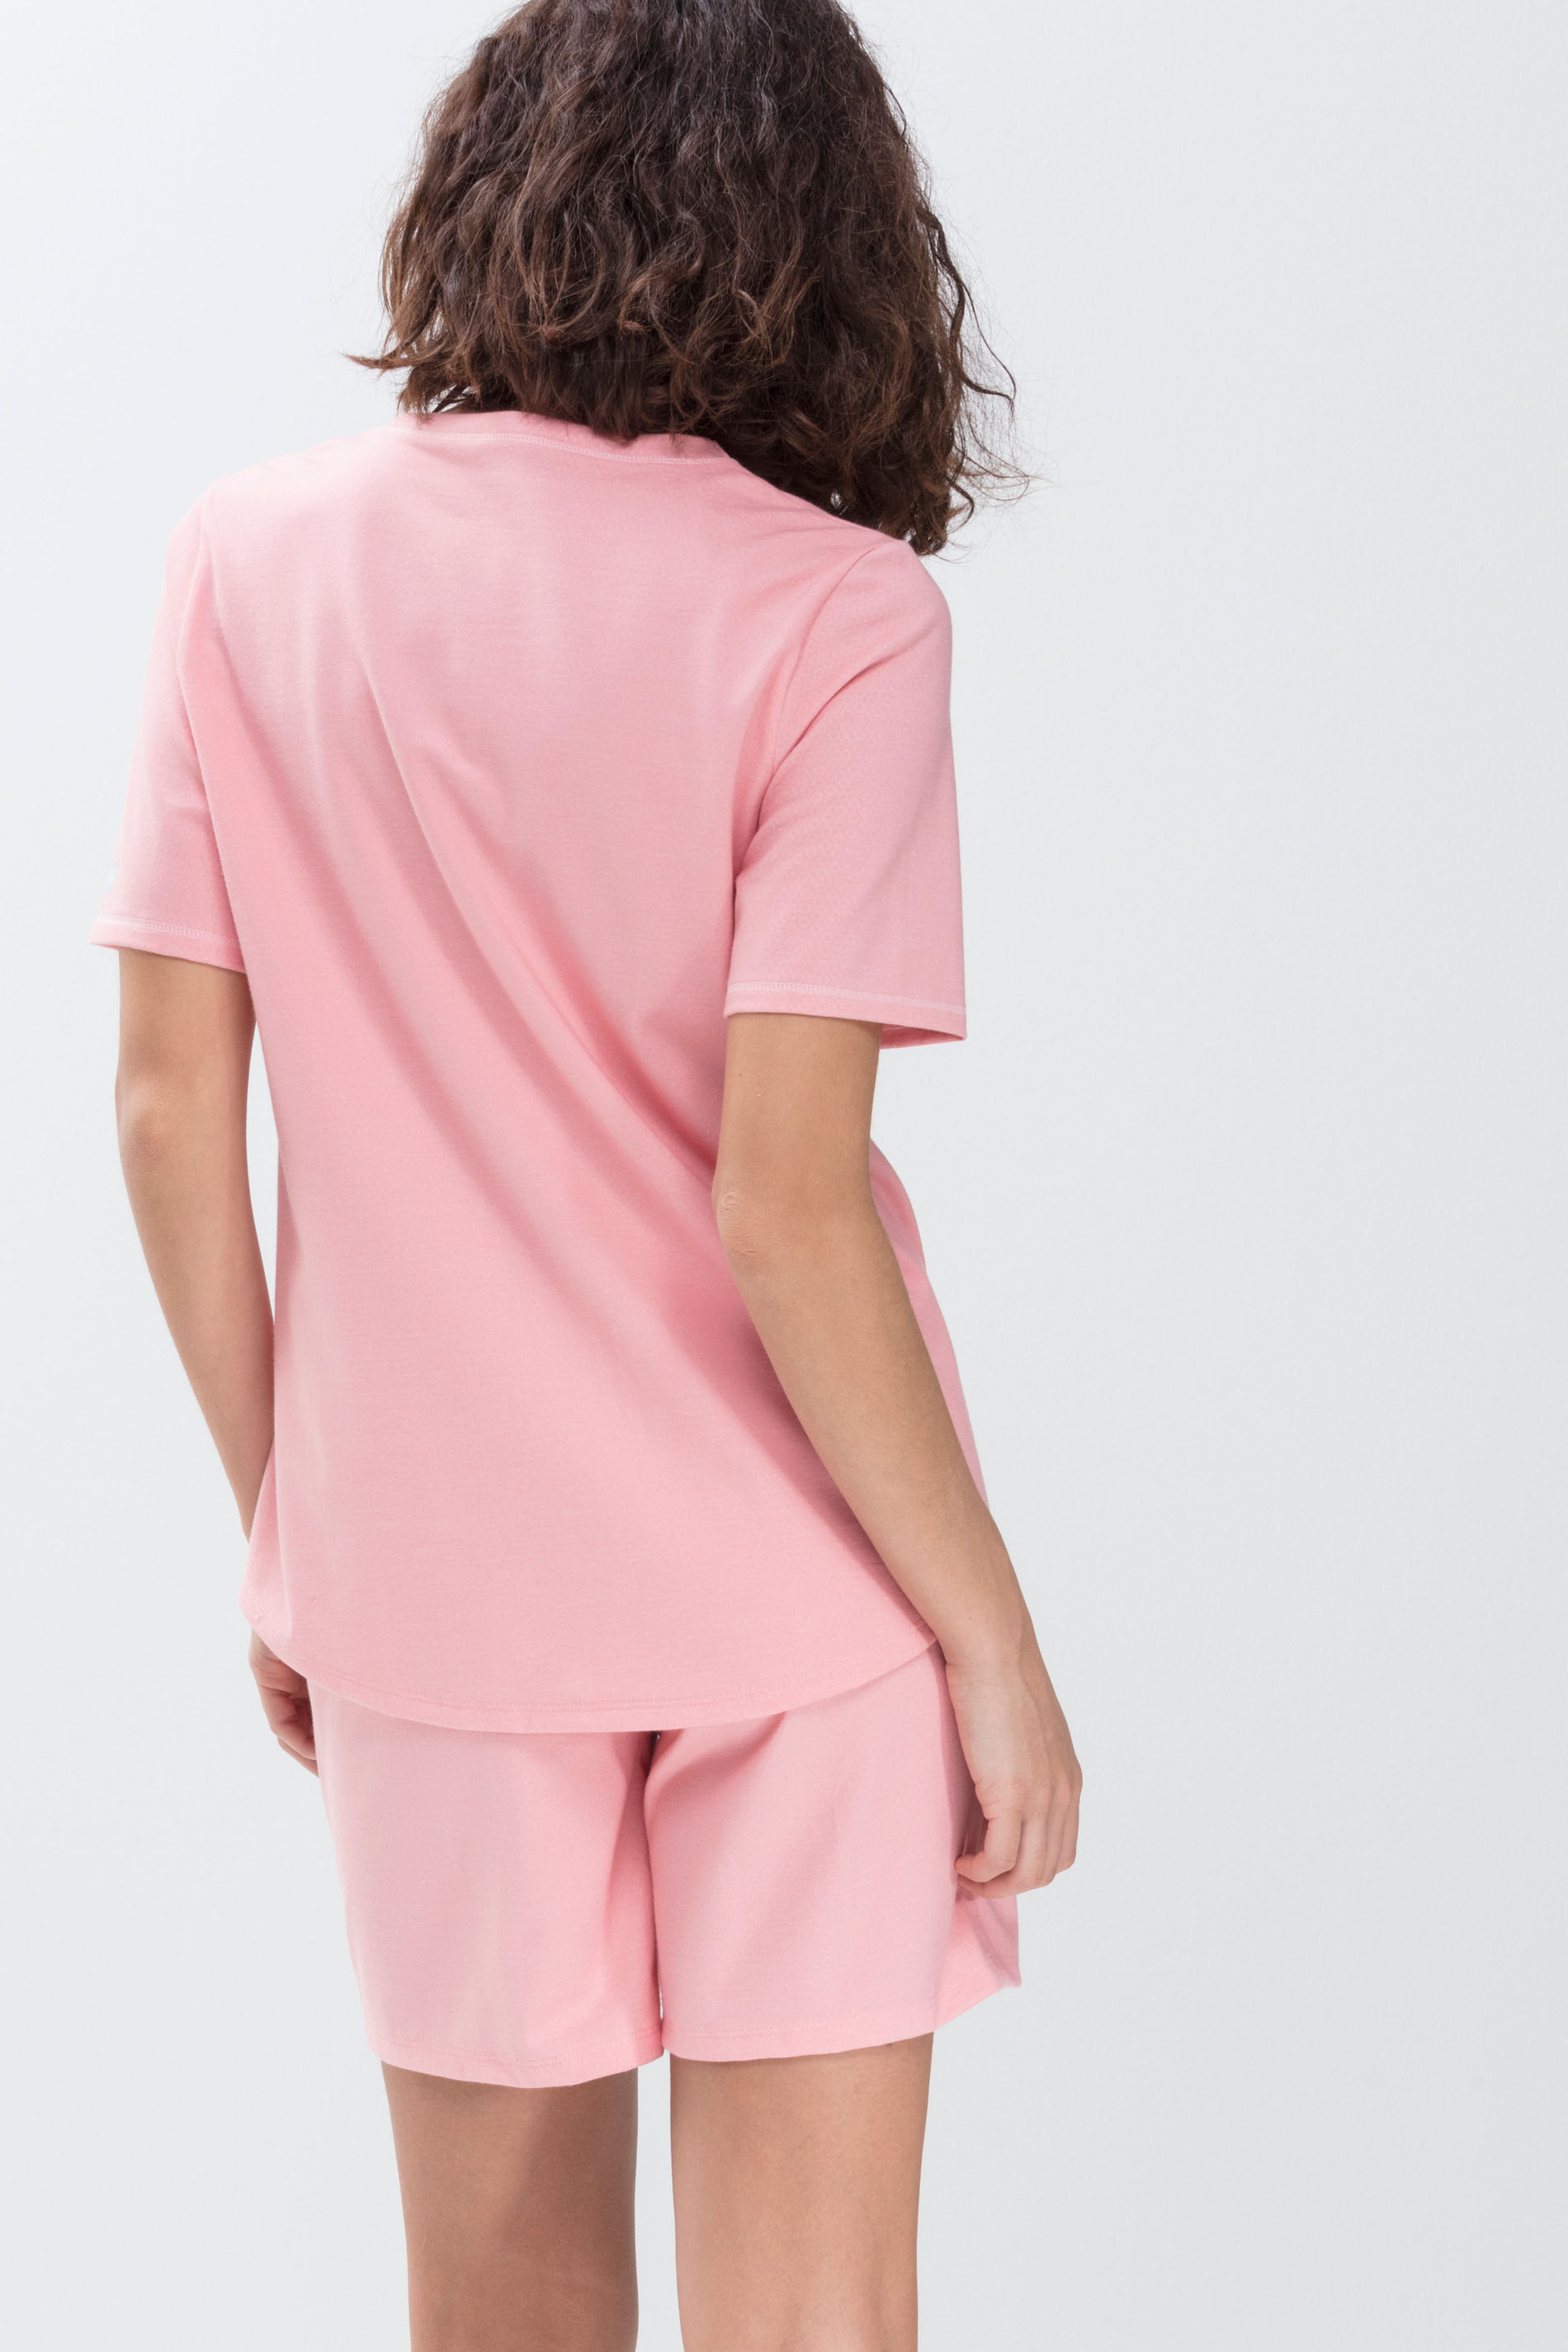 T-shirt Powder Pink Serie Zzzleepwear Rear View | mey®